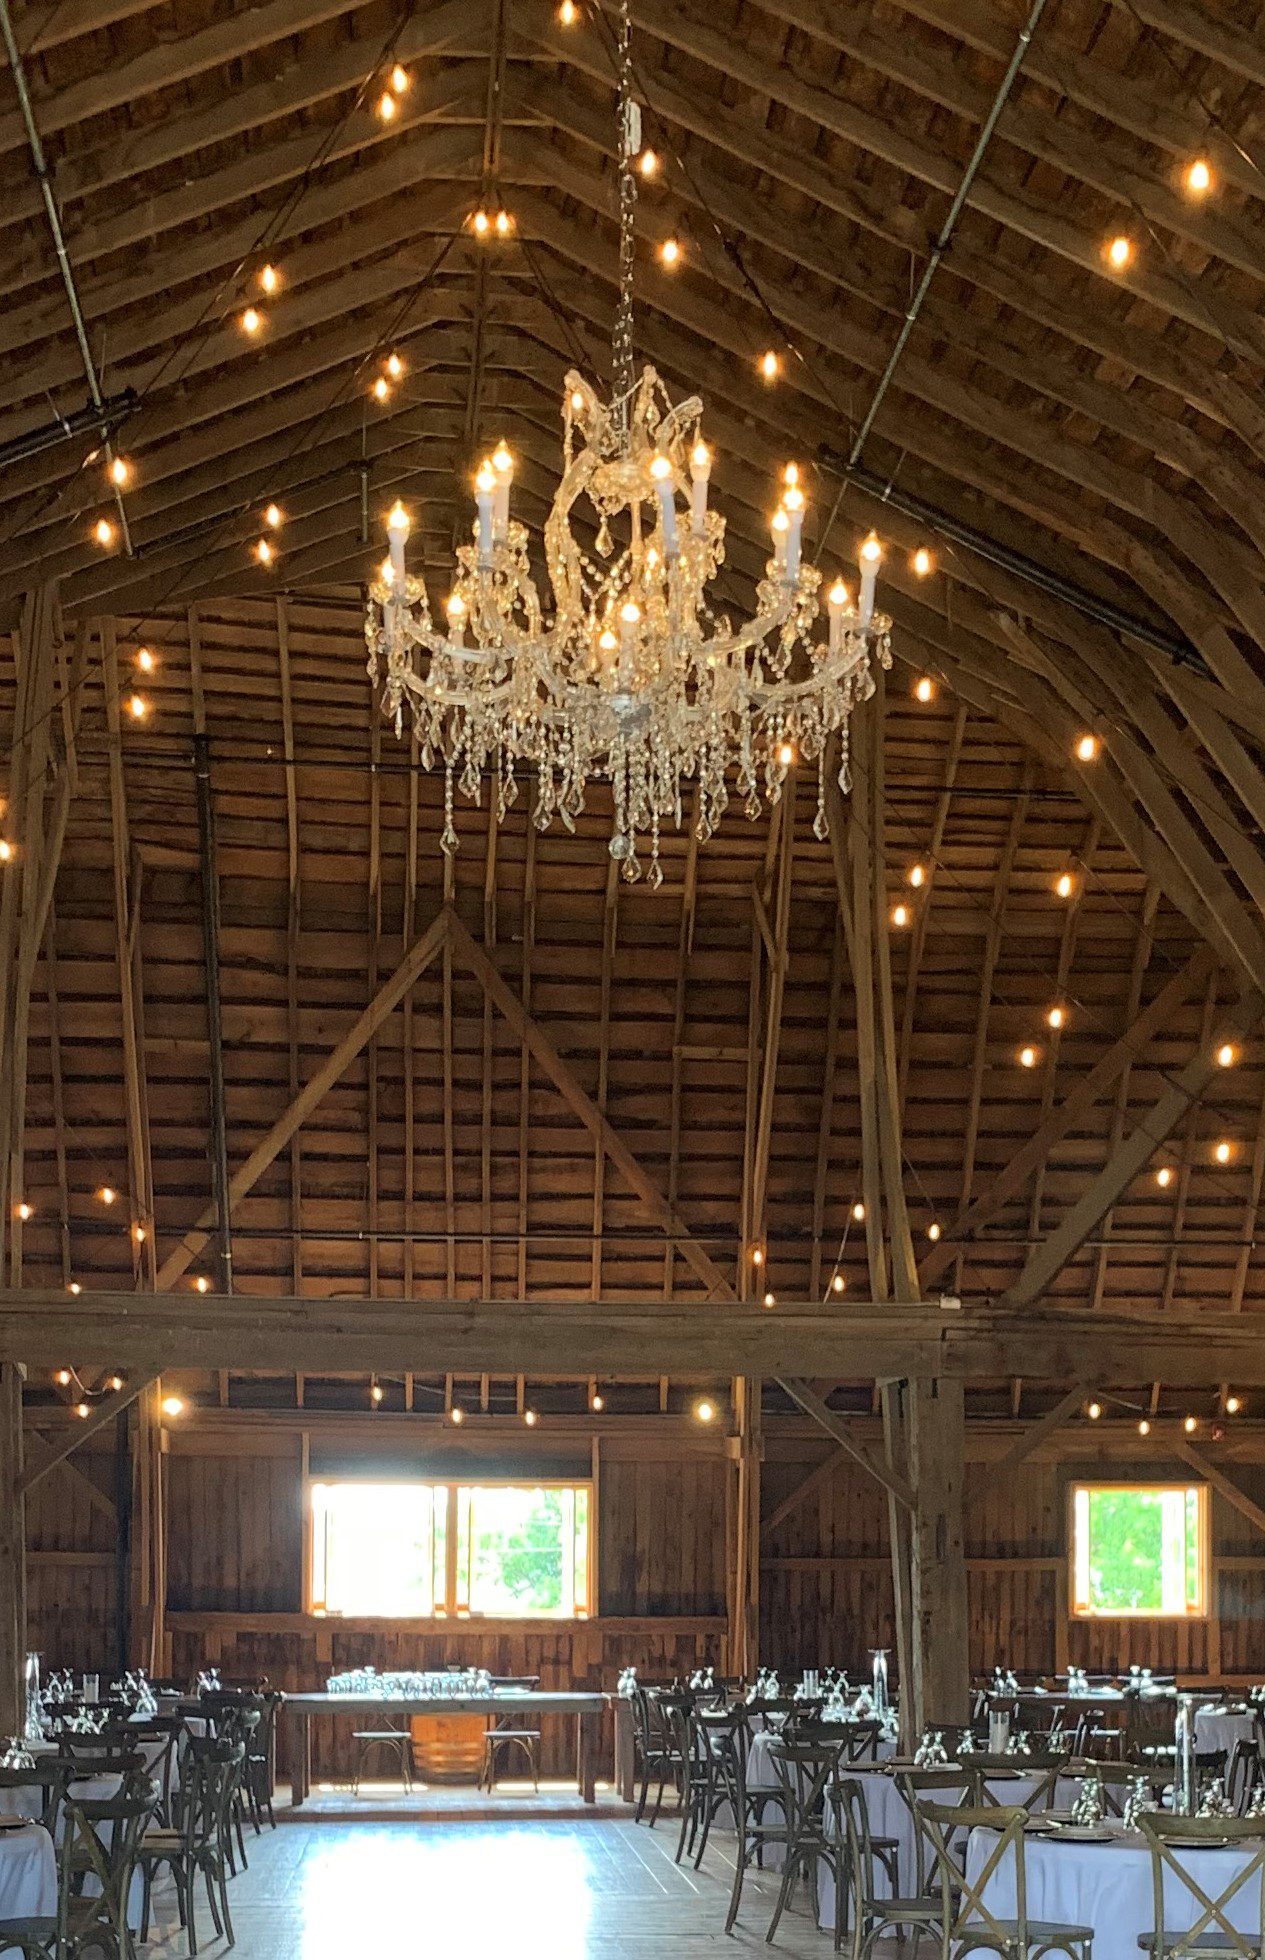 extravagant crystal chandelier in barn